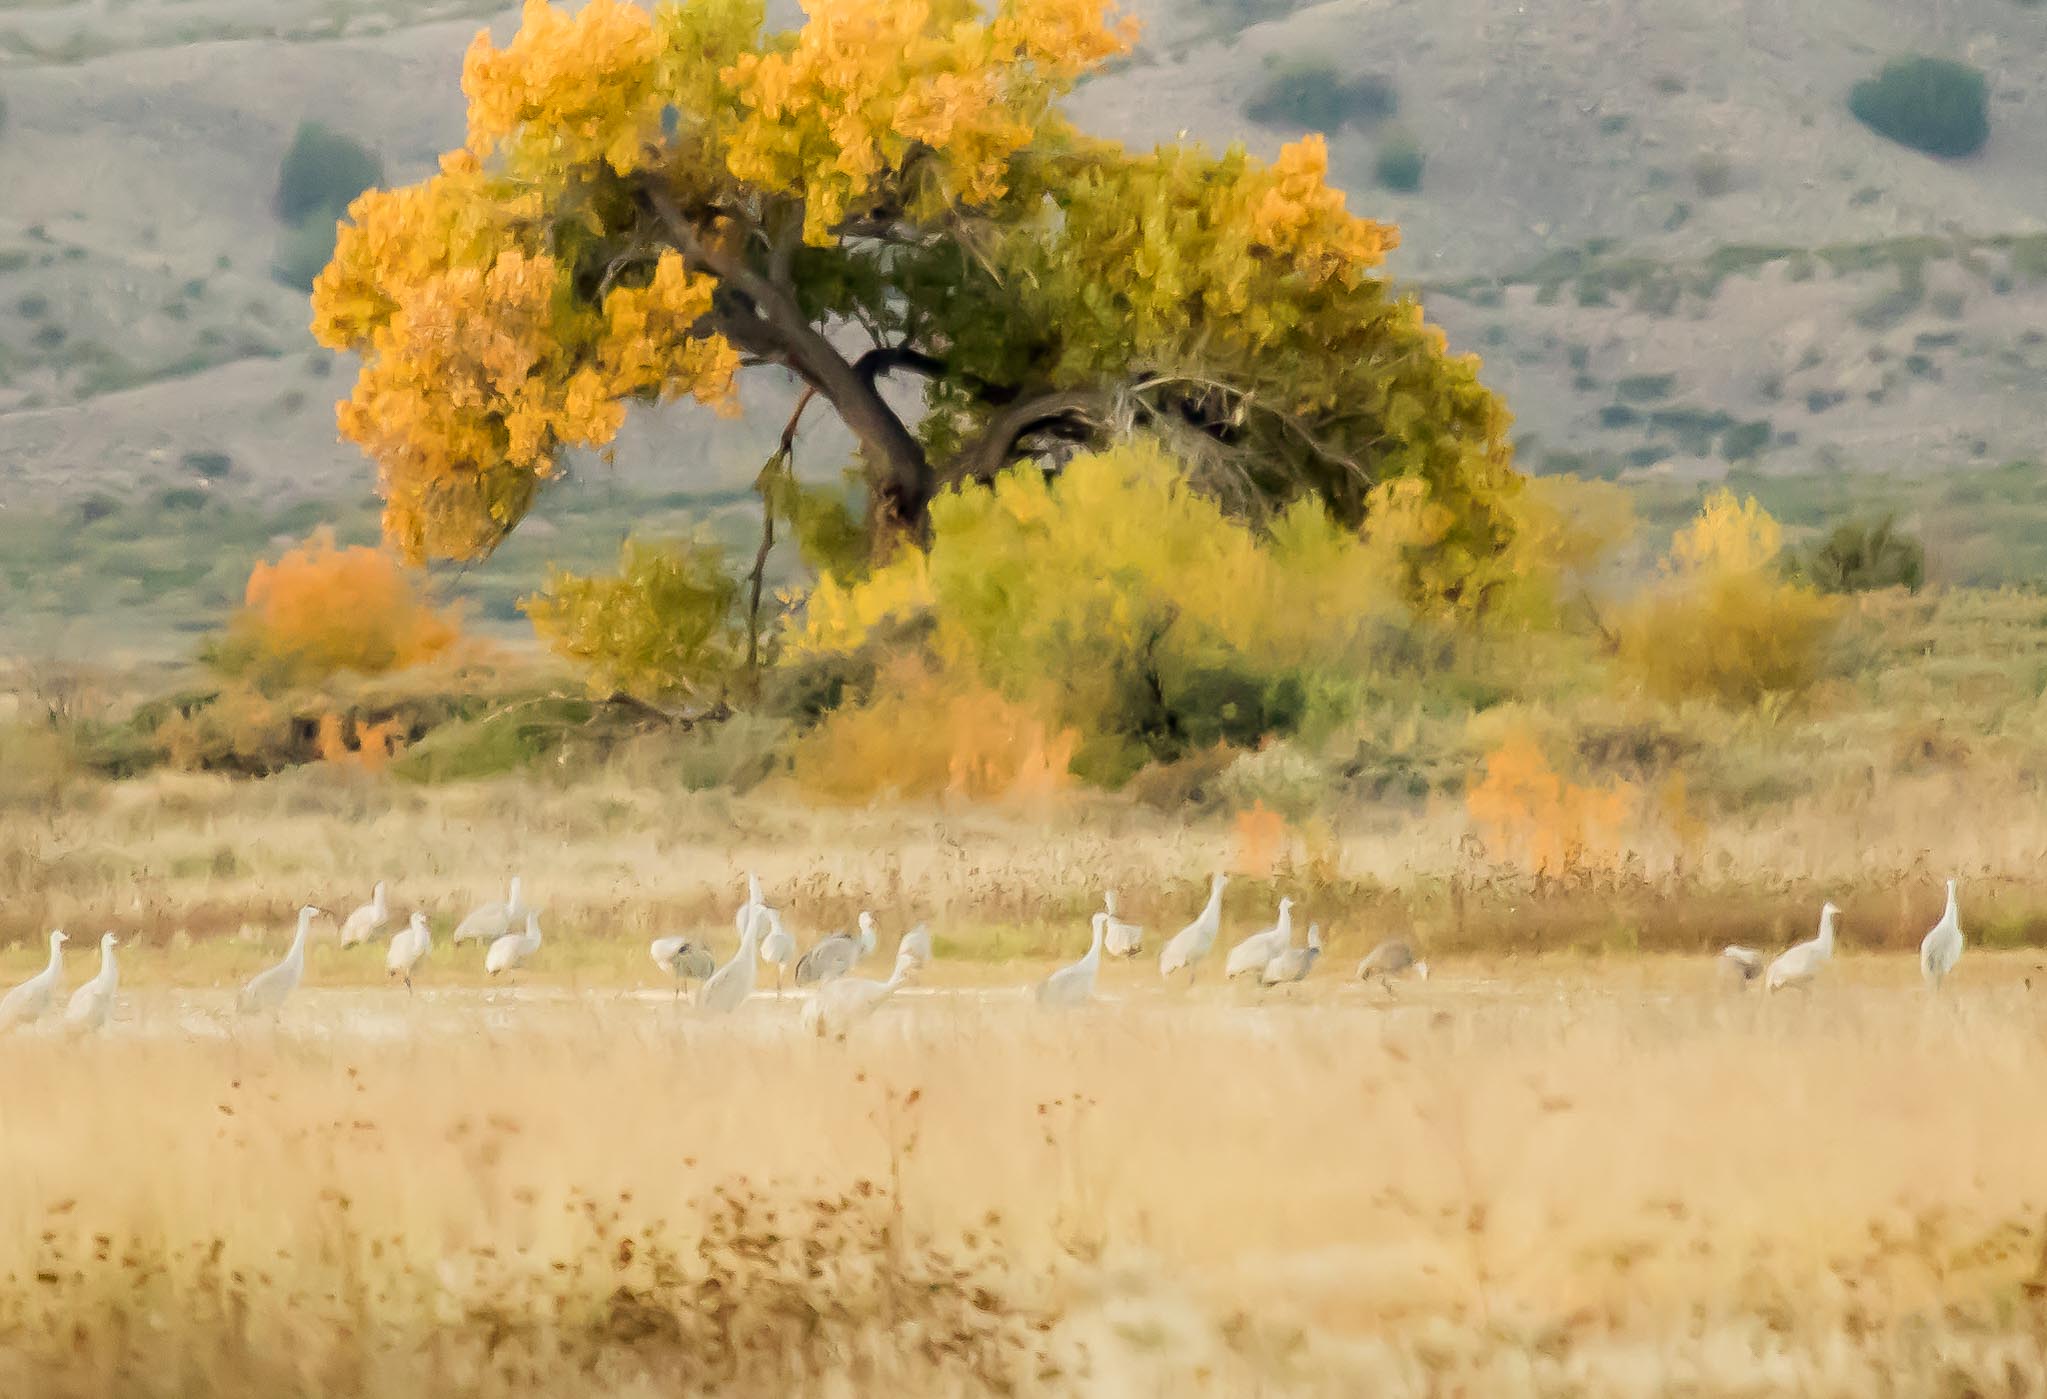 Sandhill Cranes at the pond at Bosque del Apache National Wildlife Refuge, San Antonio NM, November 11, 2014